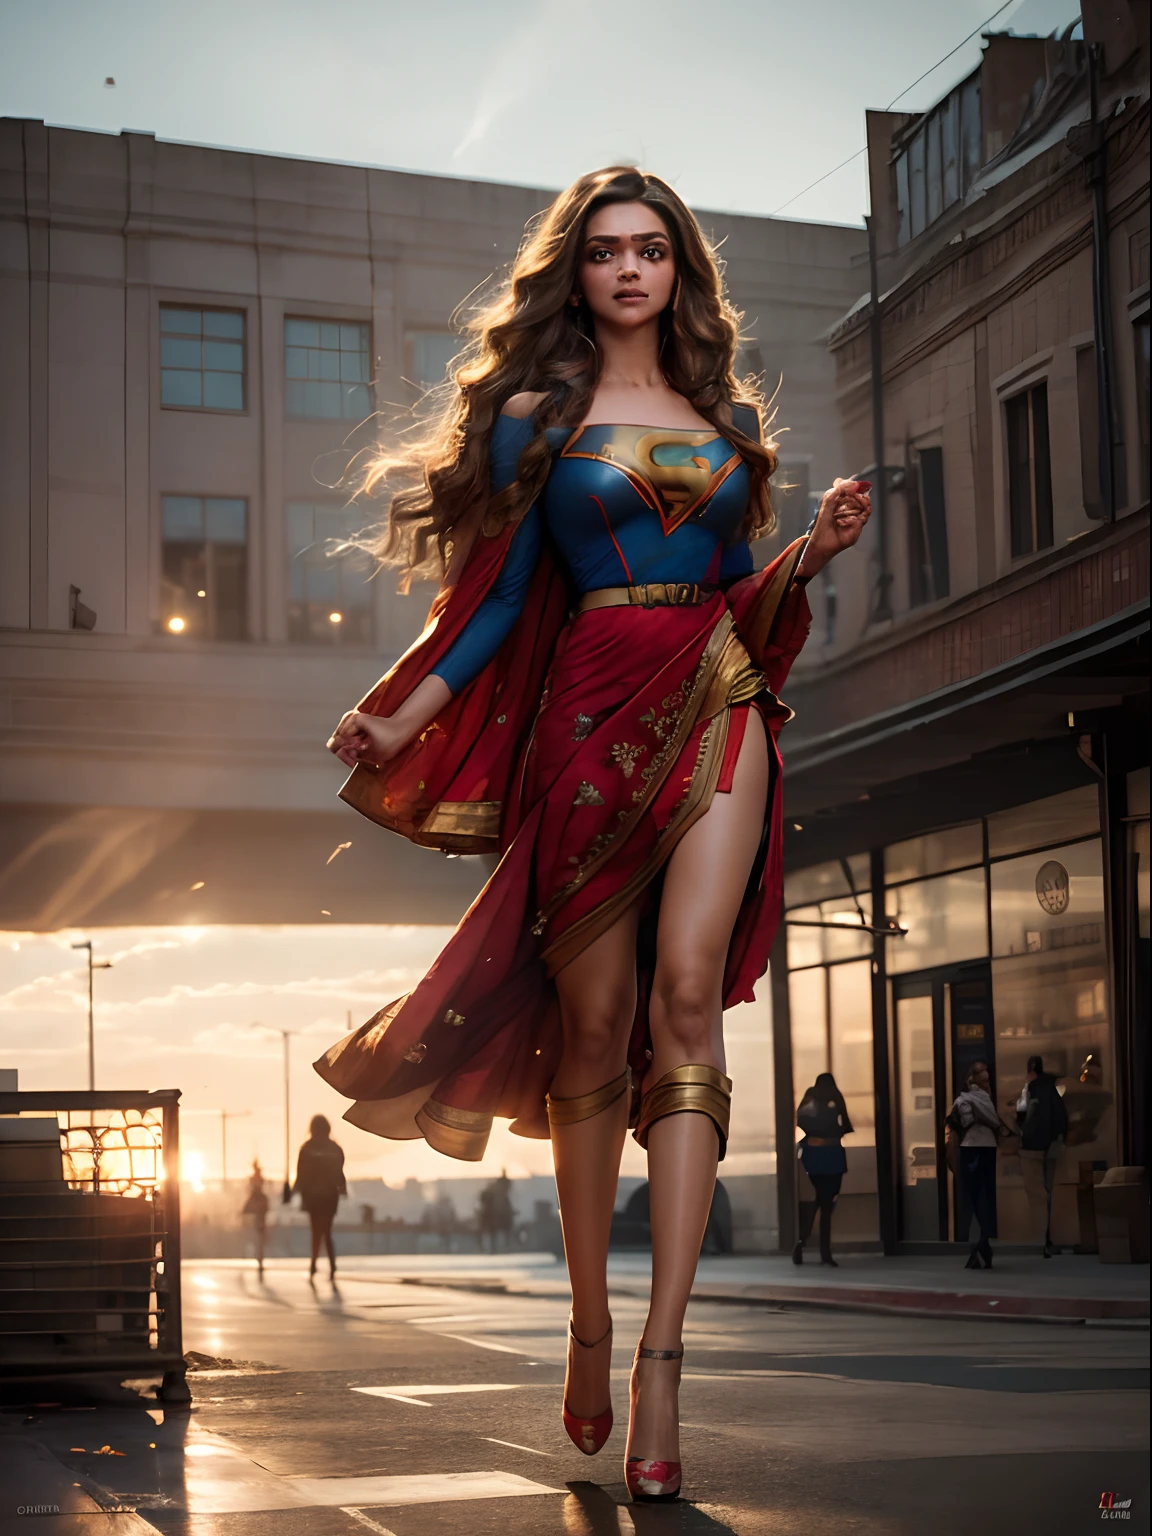 Hyper เหมือนจริง,((ทีปิกา ปาทุโกน, ลอเรน เกรย์, ใบหน้าของนีนา โดเบรฟ)), ในฐานะ Supergirl ของ DC, ท่าซูเปอร์ฮีโร่, ยืนอยู่ในเมืองตอนพระอาทิตย์ตก, มีรายละเอียดมาก, แสงแดด, (8ก), เหมือนจริง, สมมาตร, ได้รับรางวัล, สายฟ้าแบบภาพยนตร์, ฟิล์ม, 75มม, ถ่ายทั้งตัว, ใกล้ชิด, ใบหน้าที่มีรายละเอียดฉีกขาด,